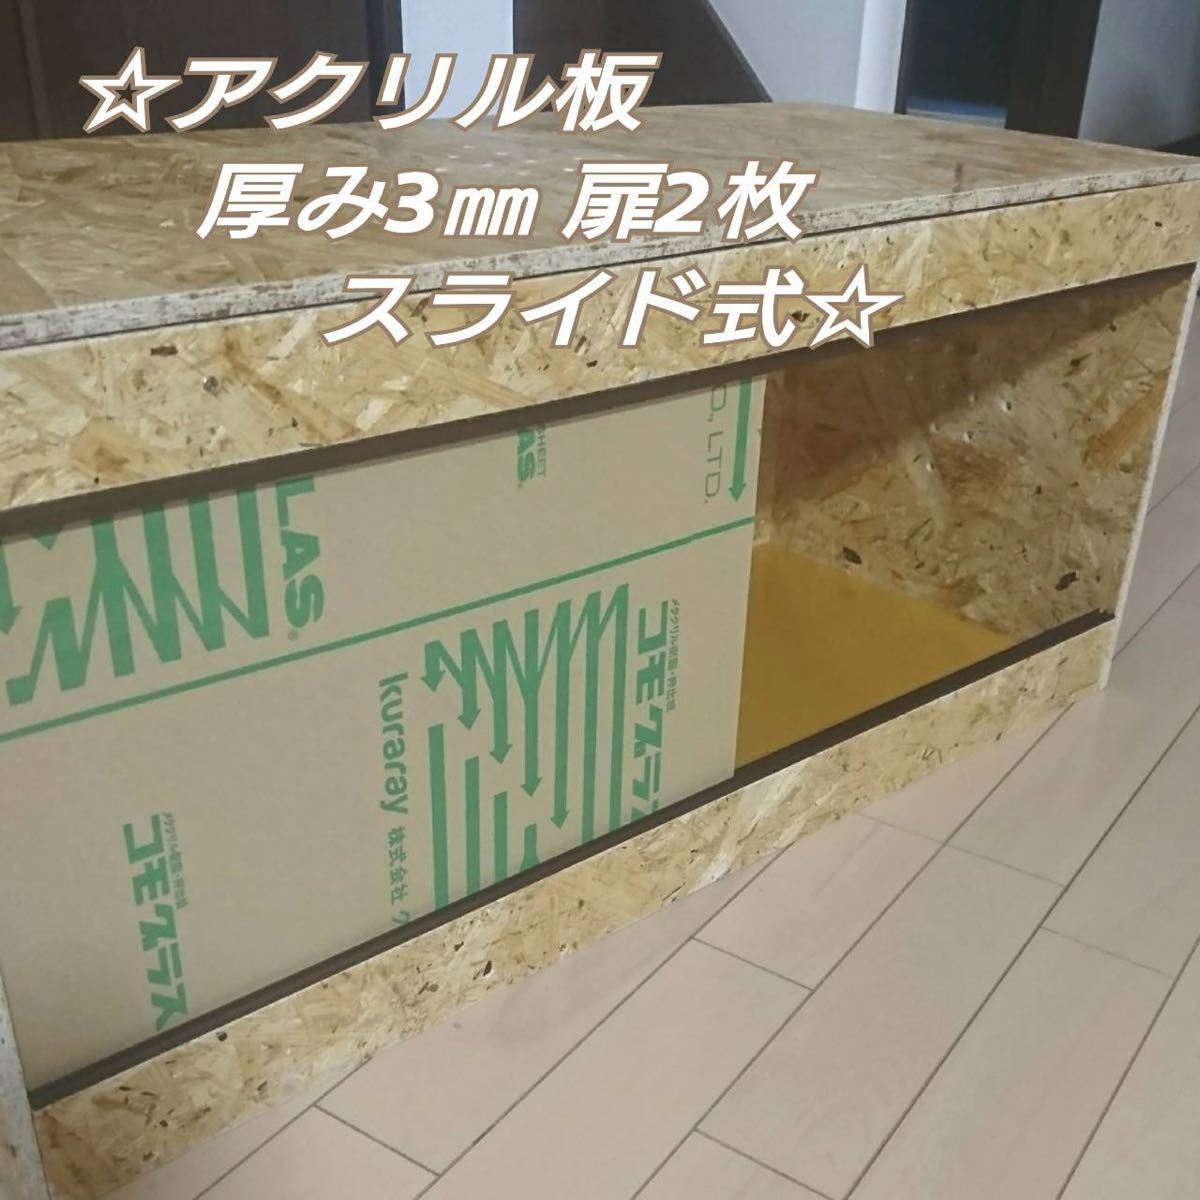 ☆80cmケージ☆爬虫類 天板 型穴空き リクガメ 飼育木製ケージ